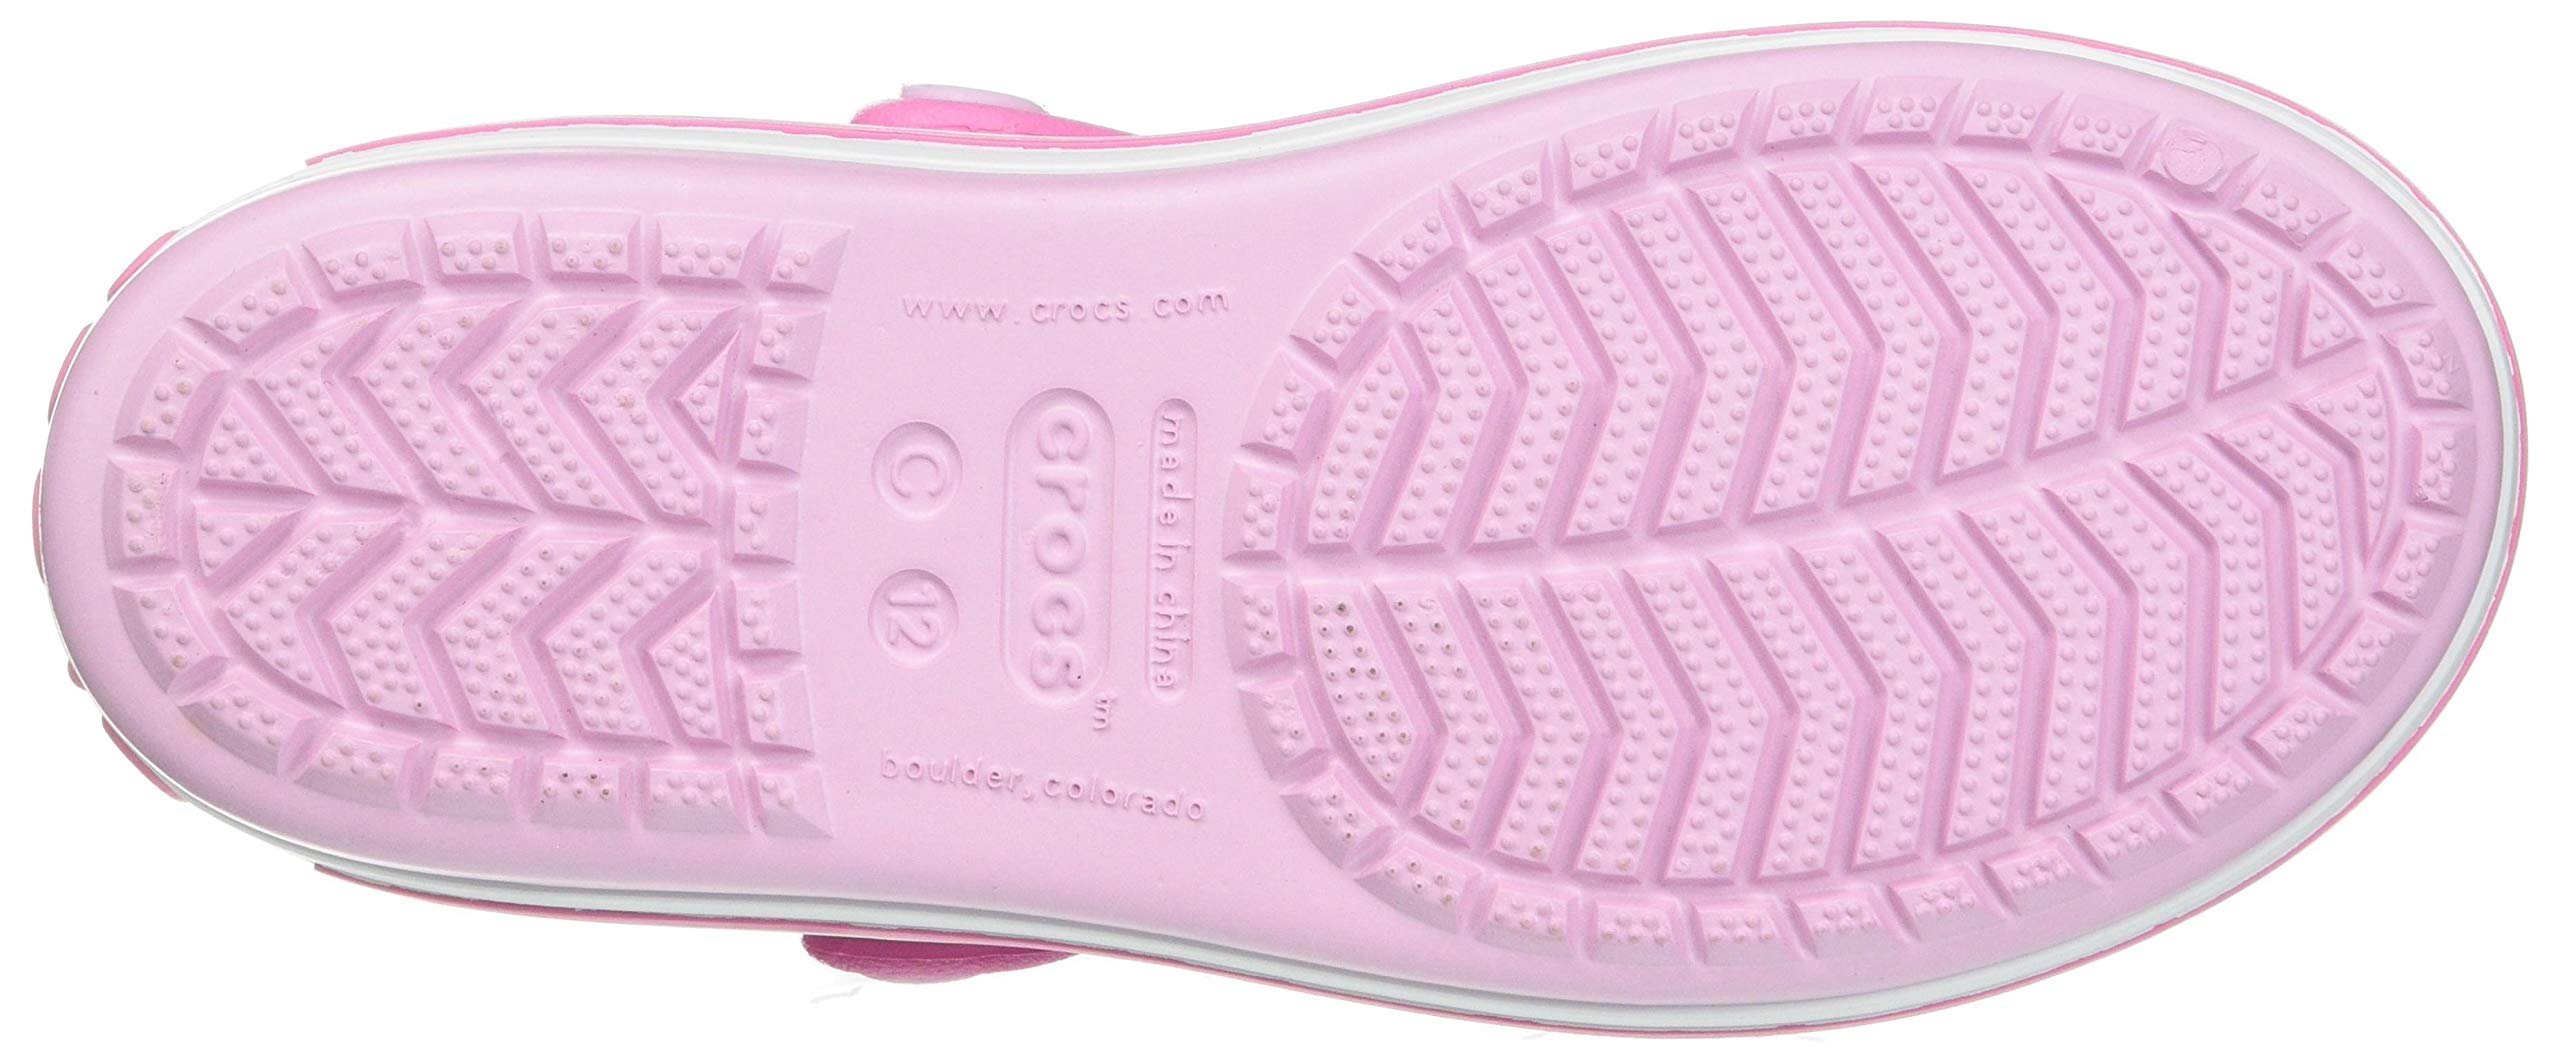 Crocs Girls/Boys Crocband Moulded Croslite Strap Fastening Sandal 100% Thermoplastic